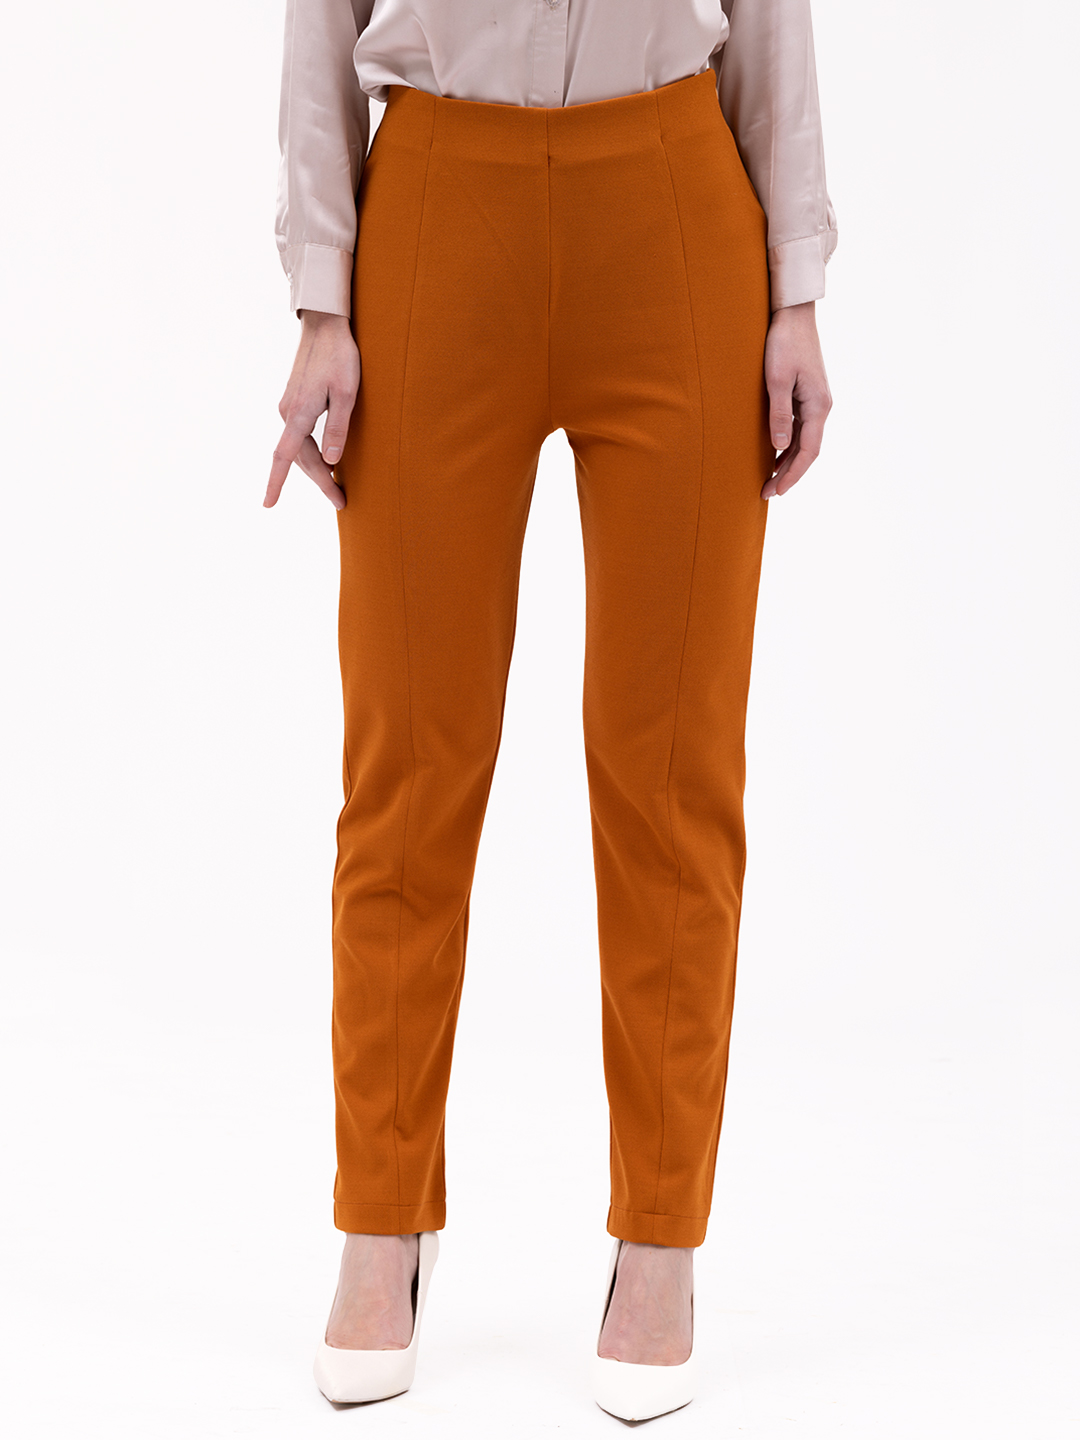 Formal Windsor Tan Trousers -2